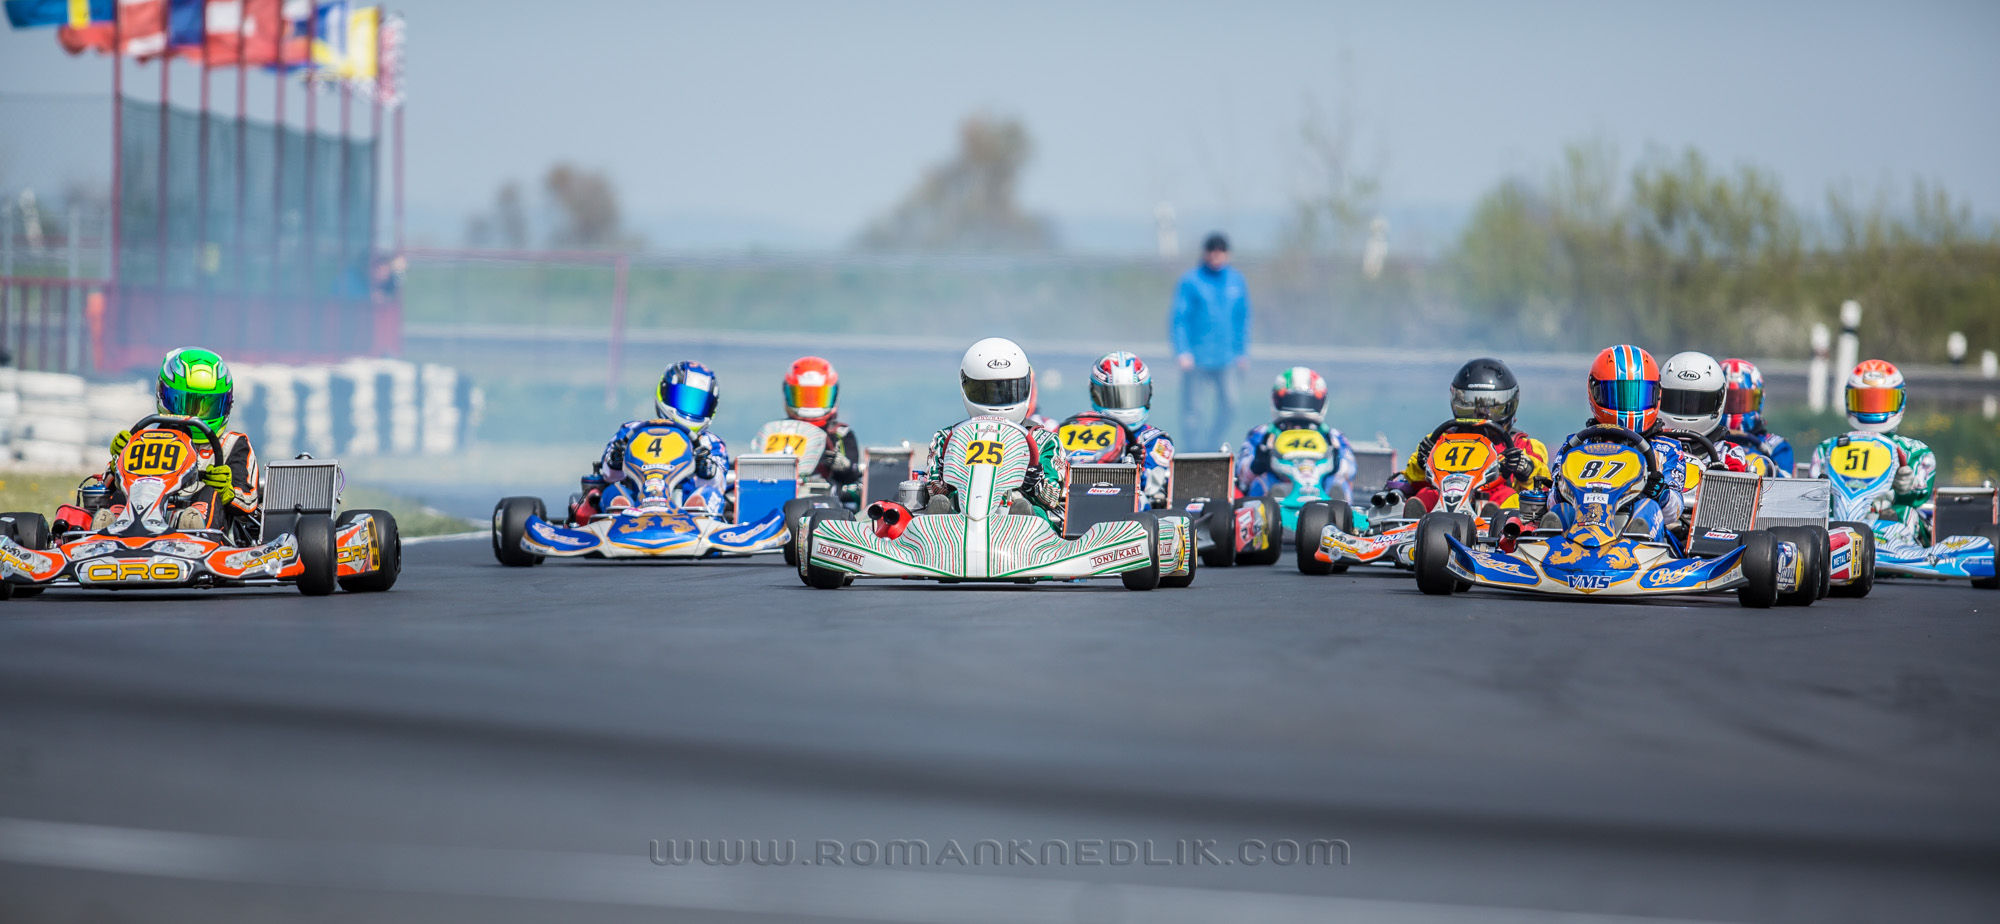 MCR_karting_race-19